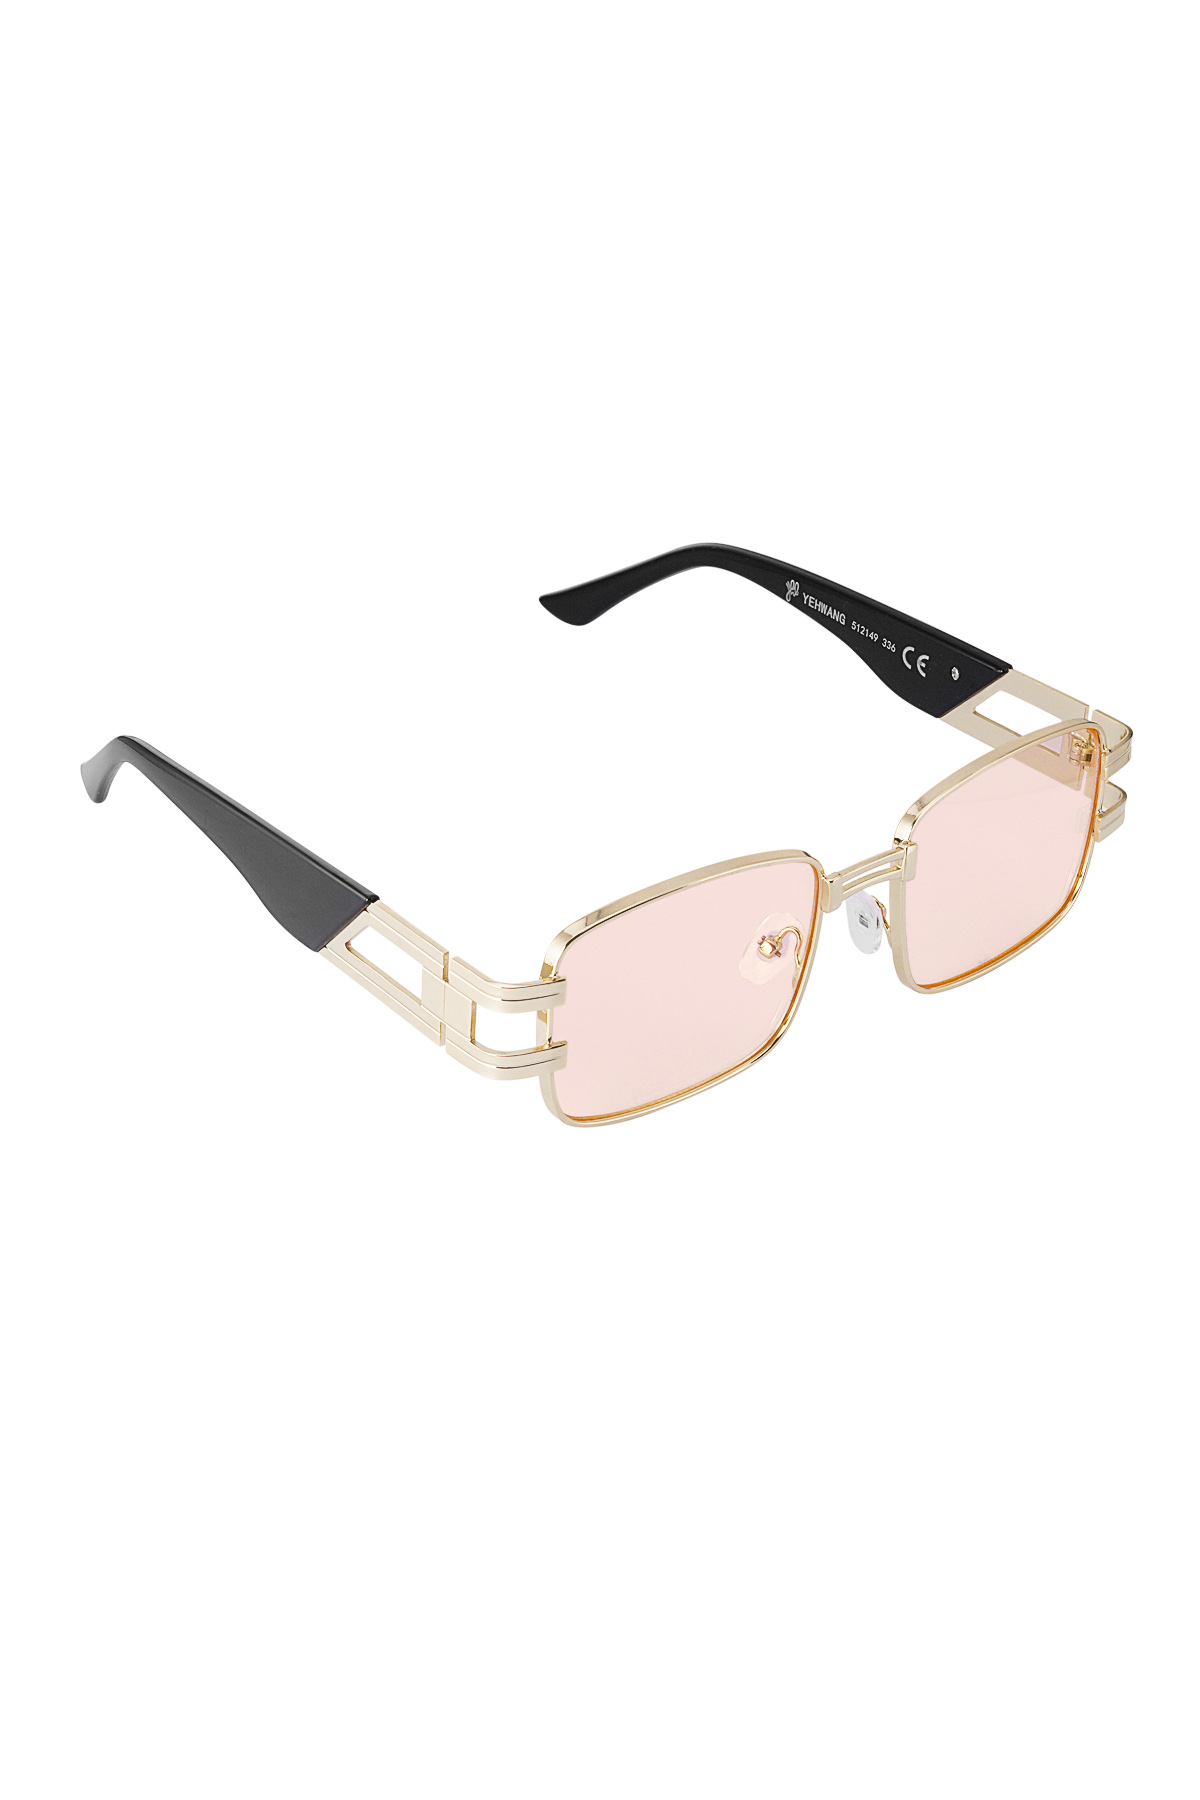 Sunglasses simple metal essential - pink gold